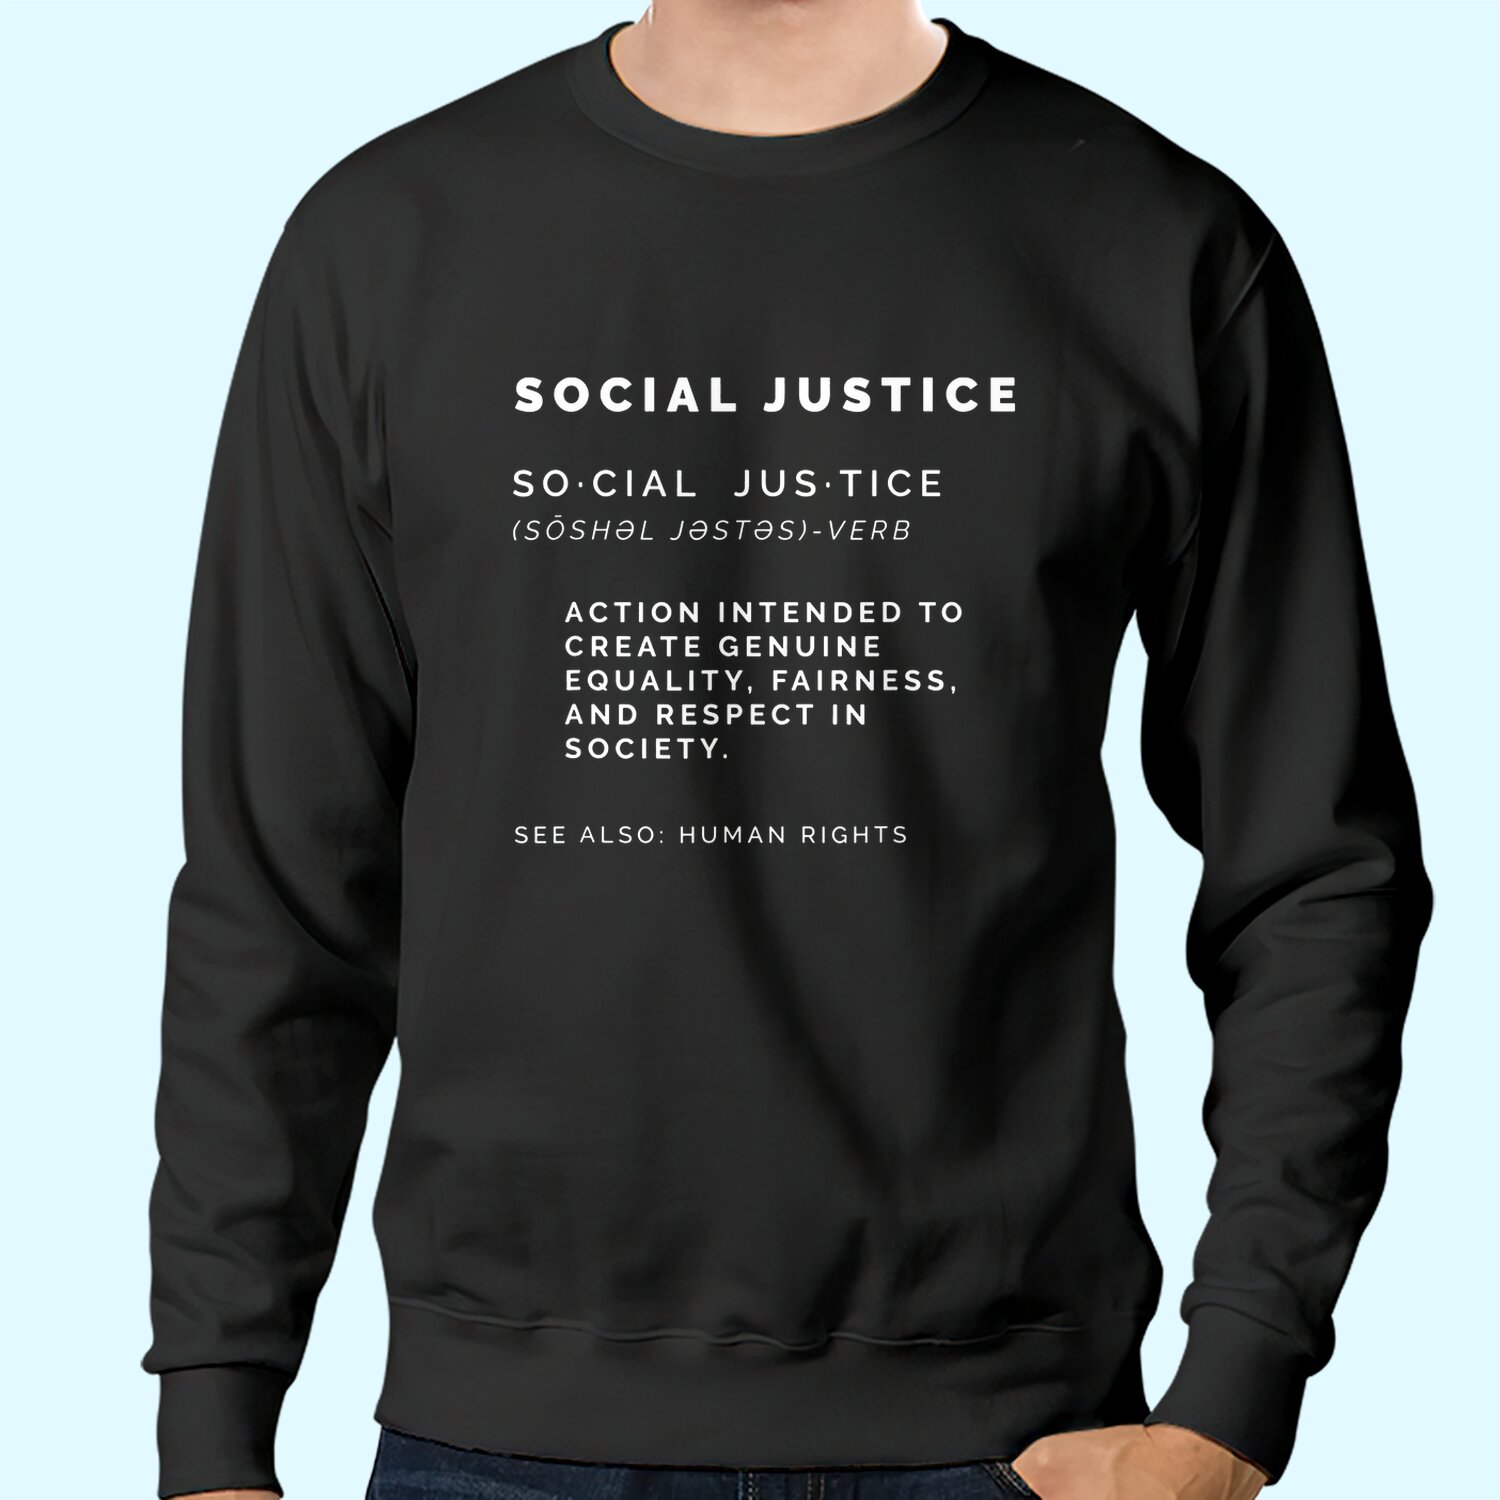 Social Justice Definition Sweatshirt | SJW, Liberal, Civil Rights Sweatshirt